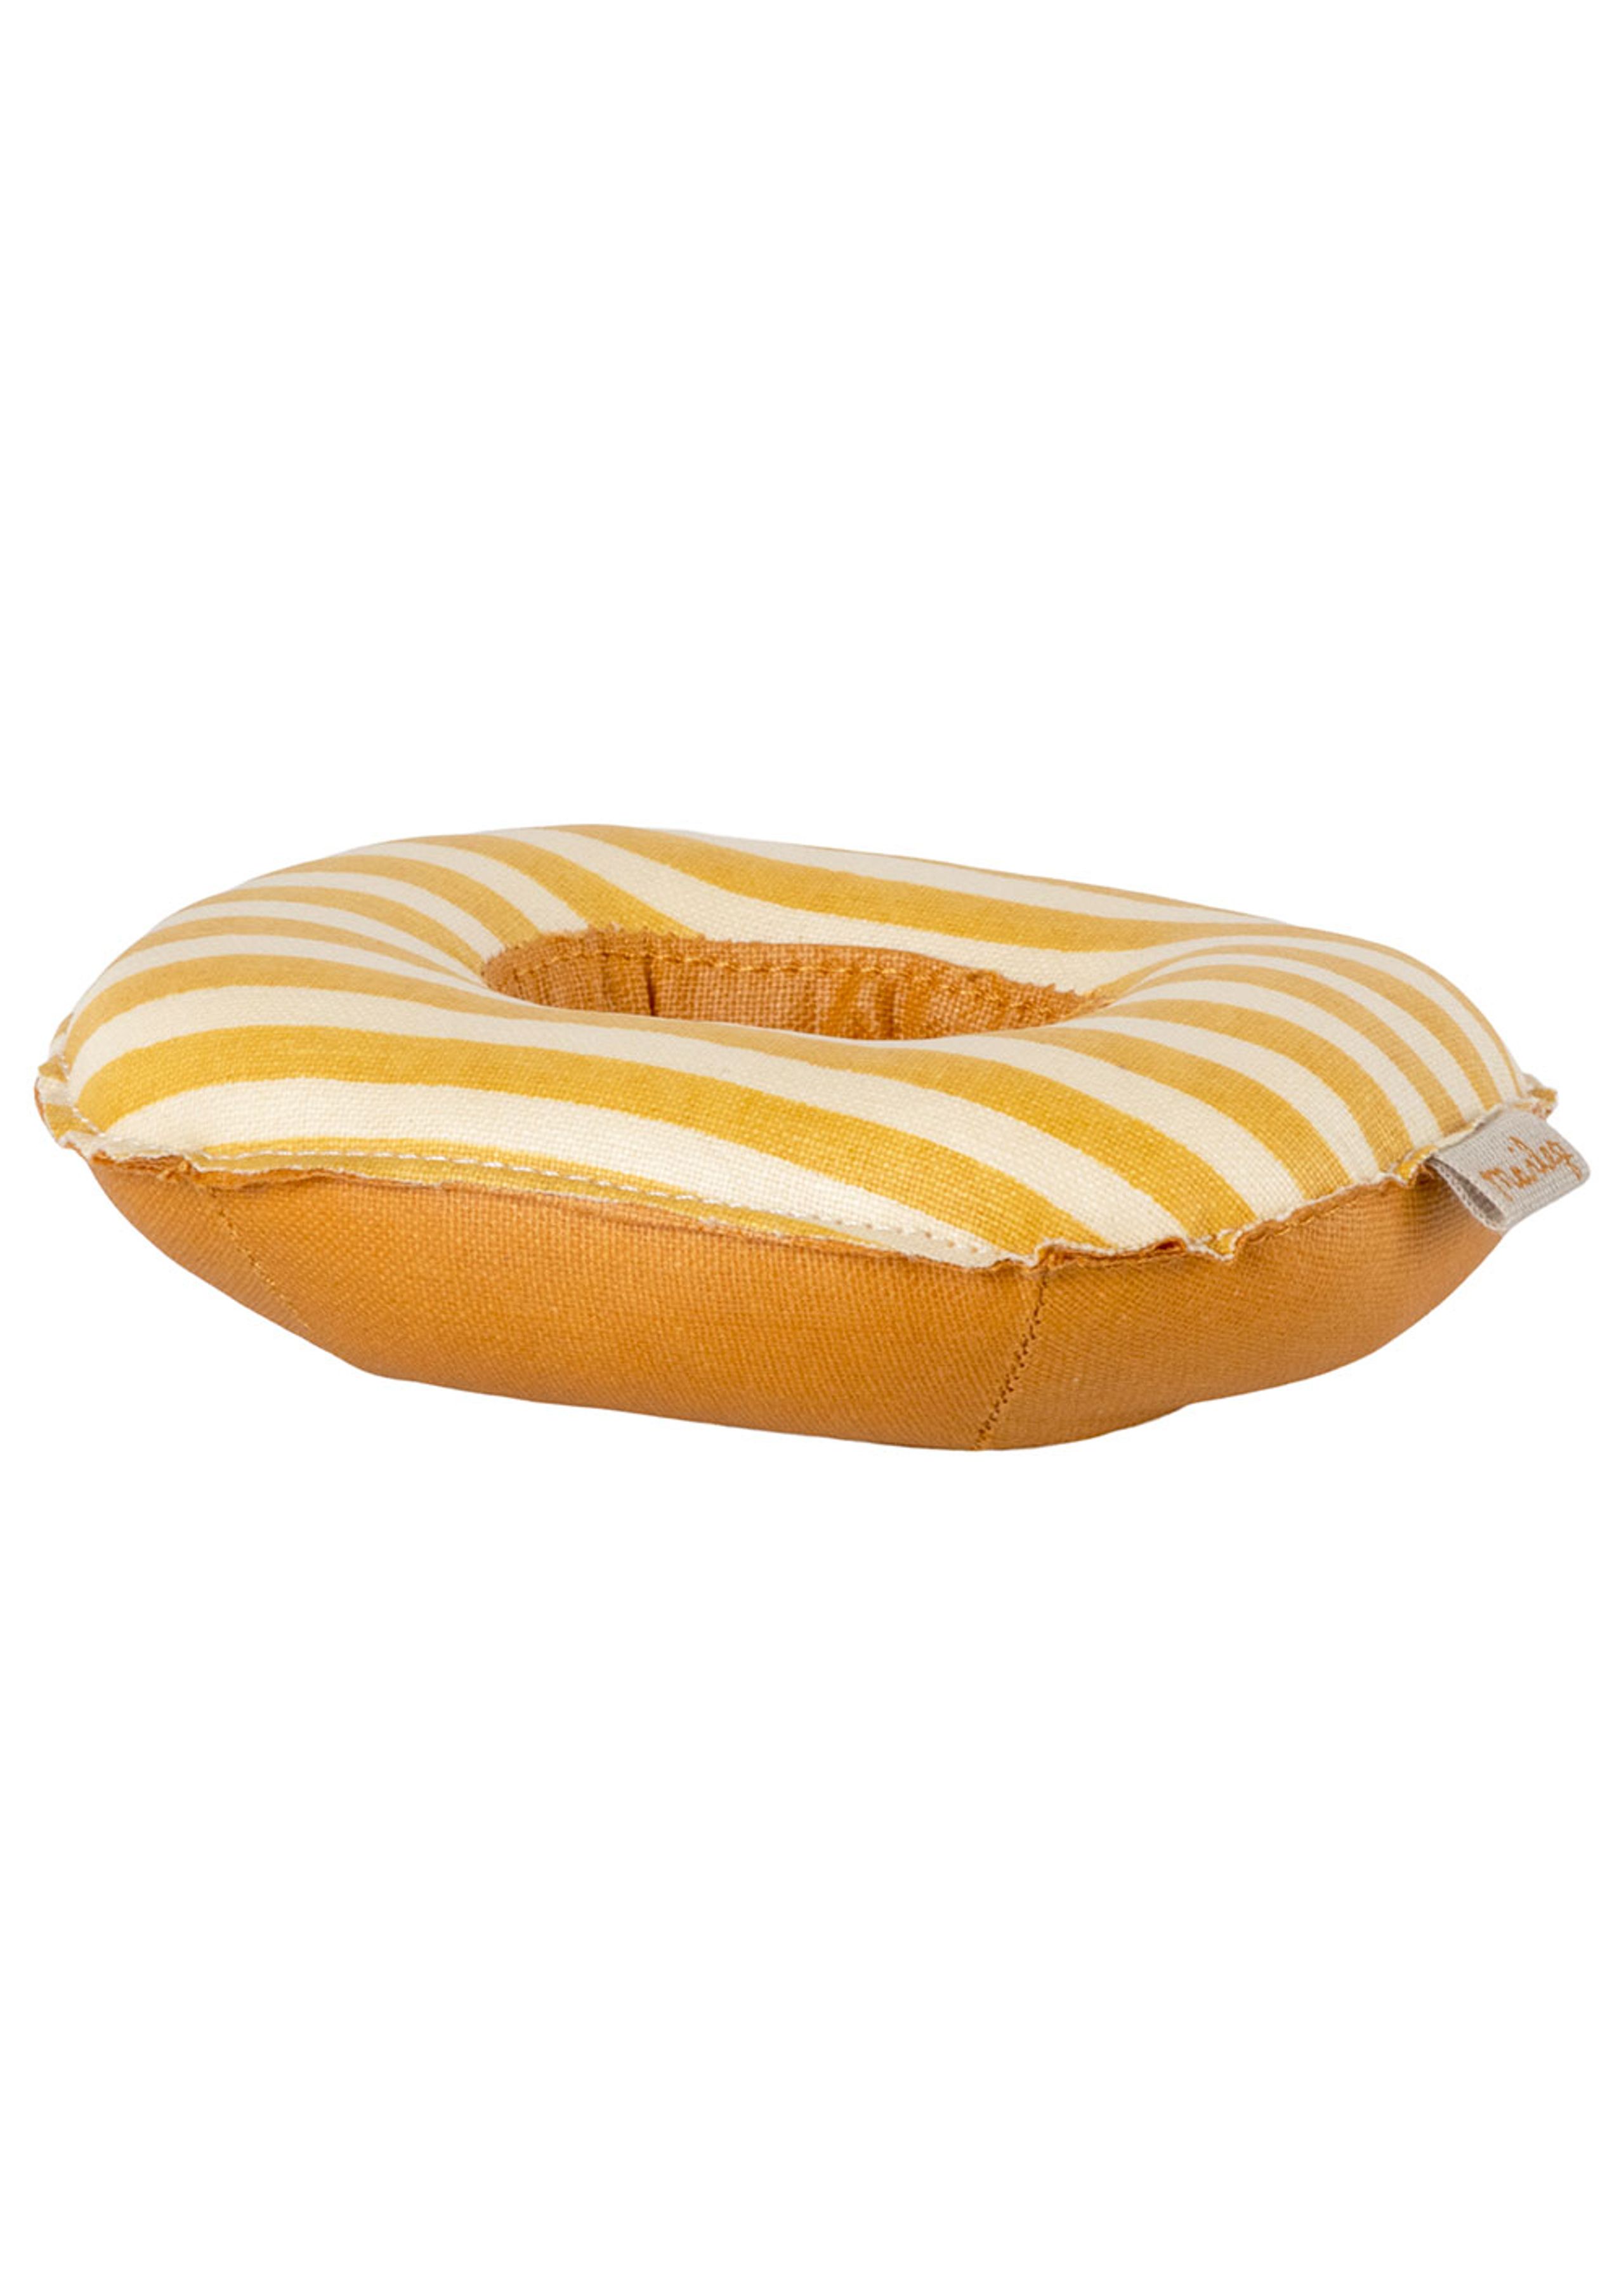 Maileg - Spielzeug - Rubber Boat - Yellow/White